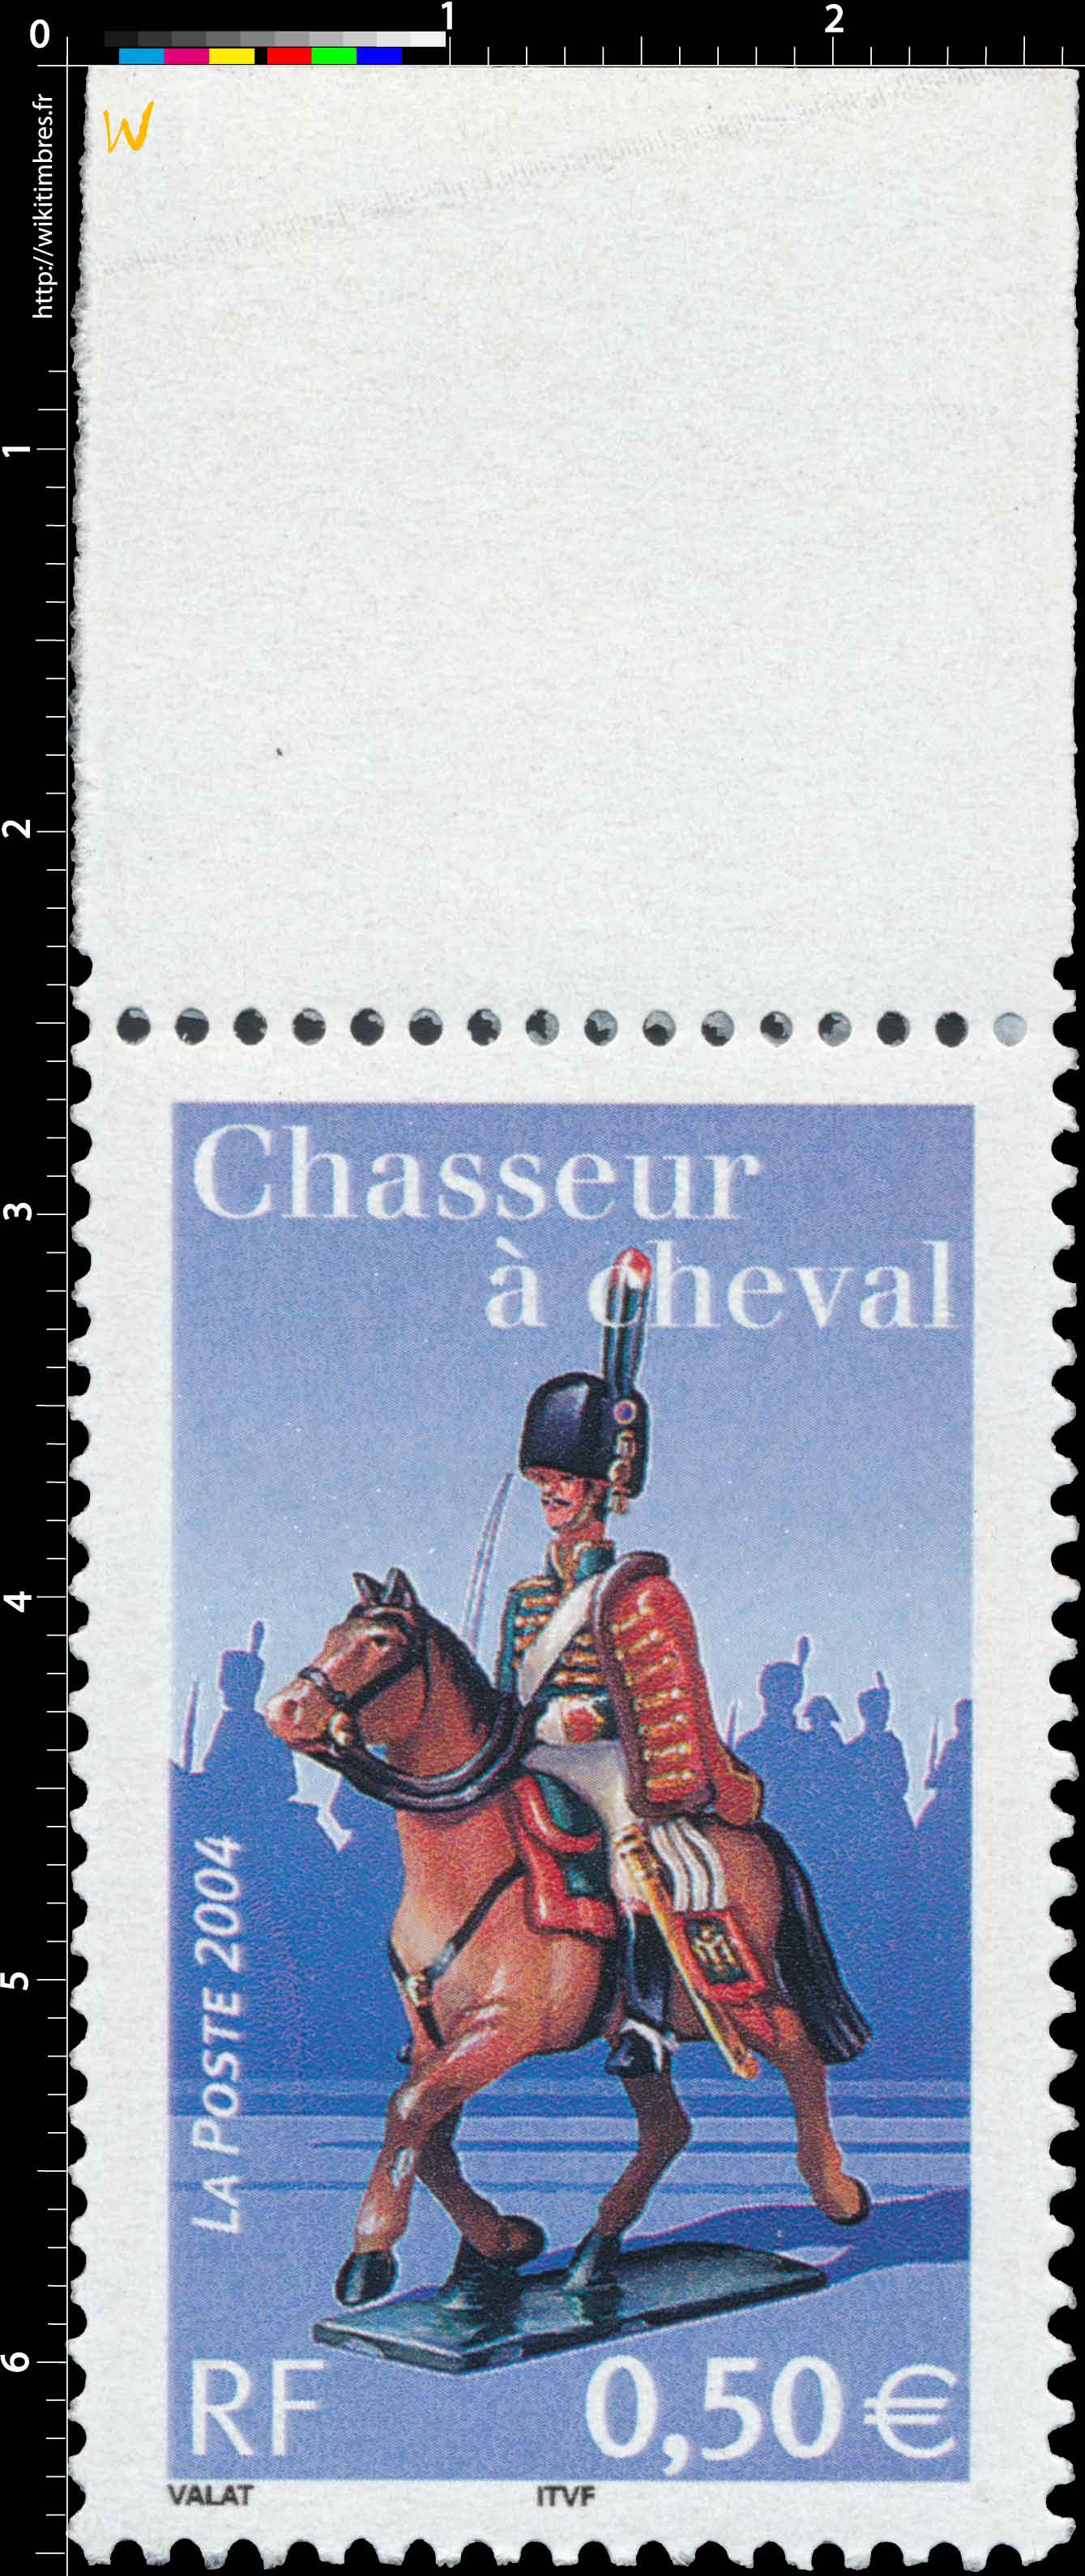 2004 Chasseur à cheval